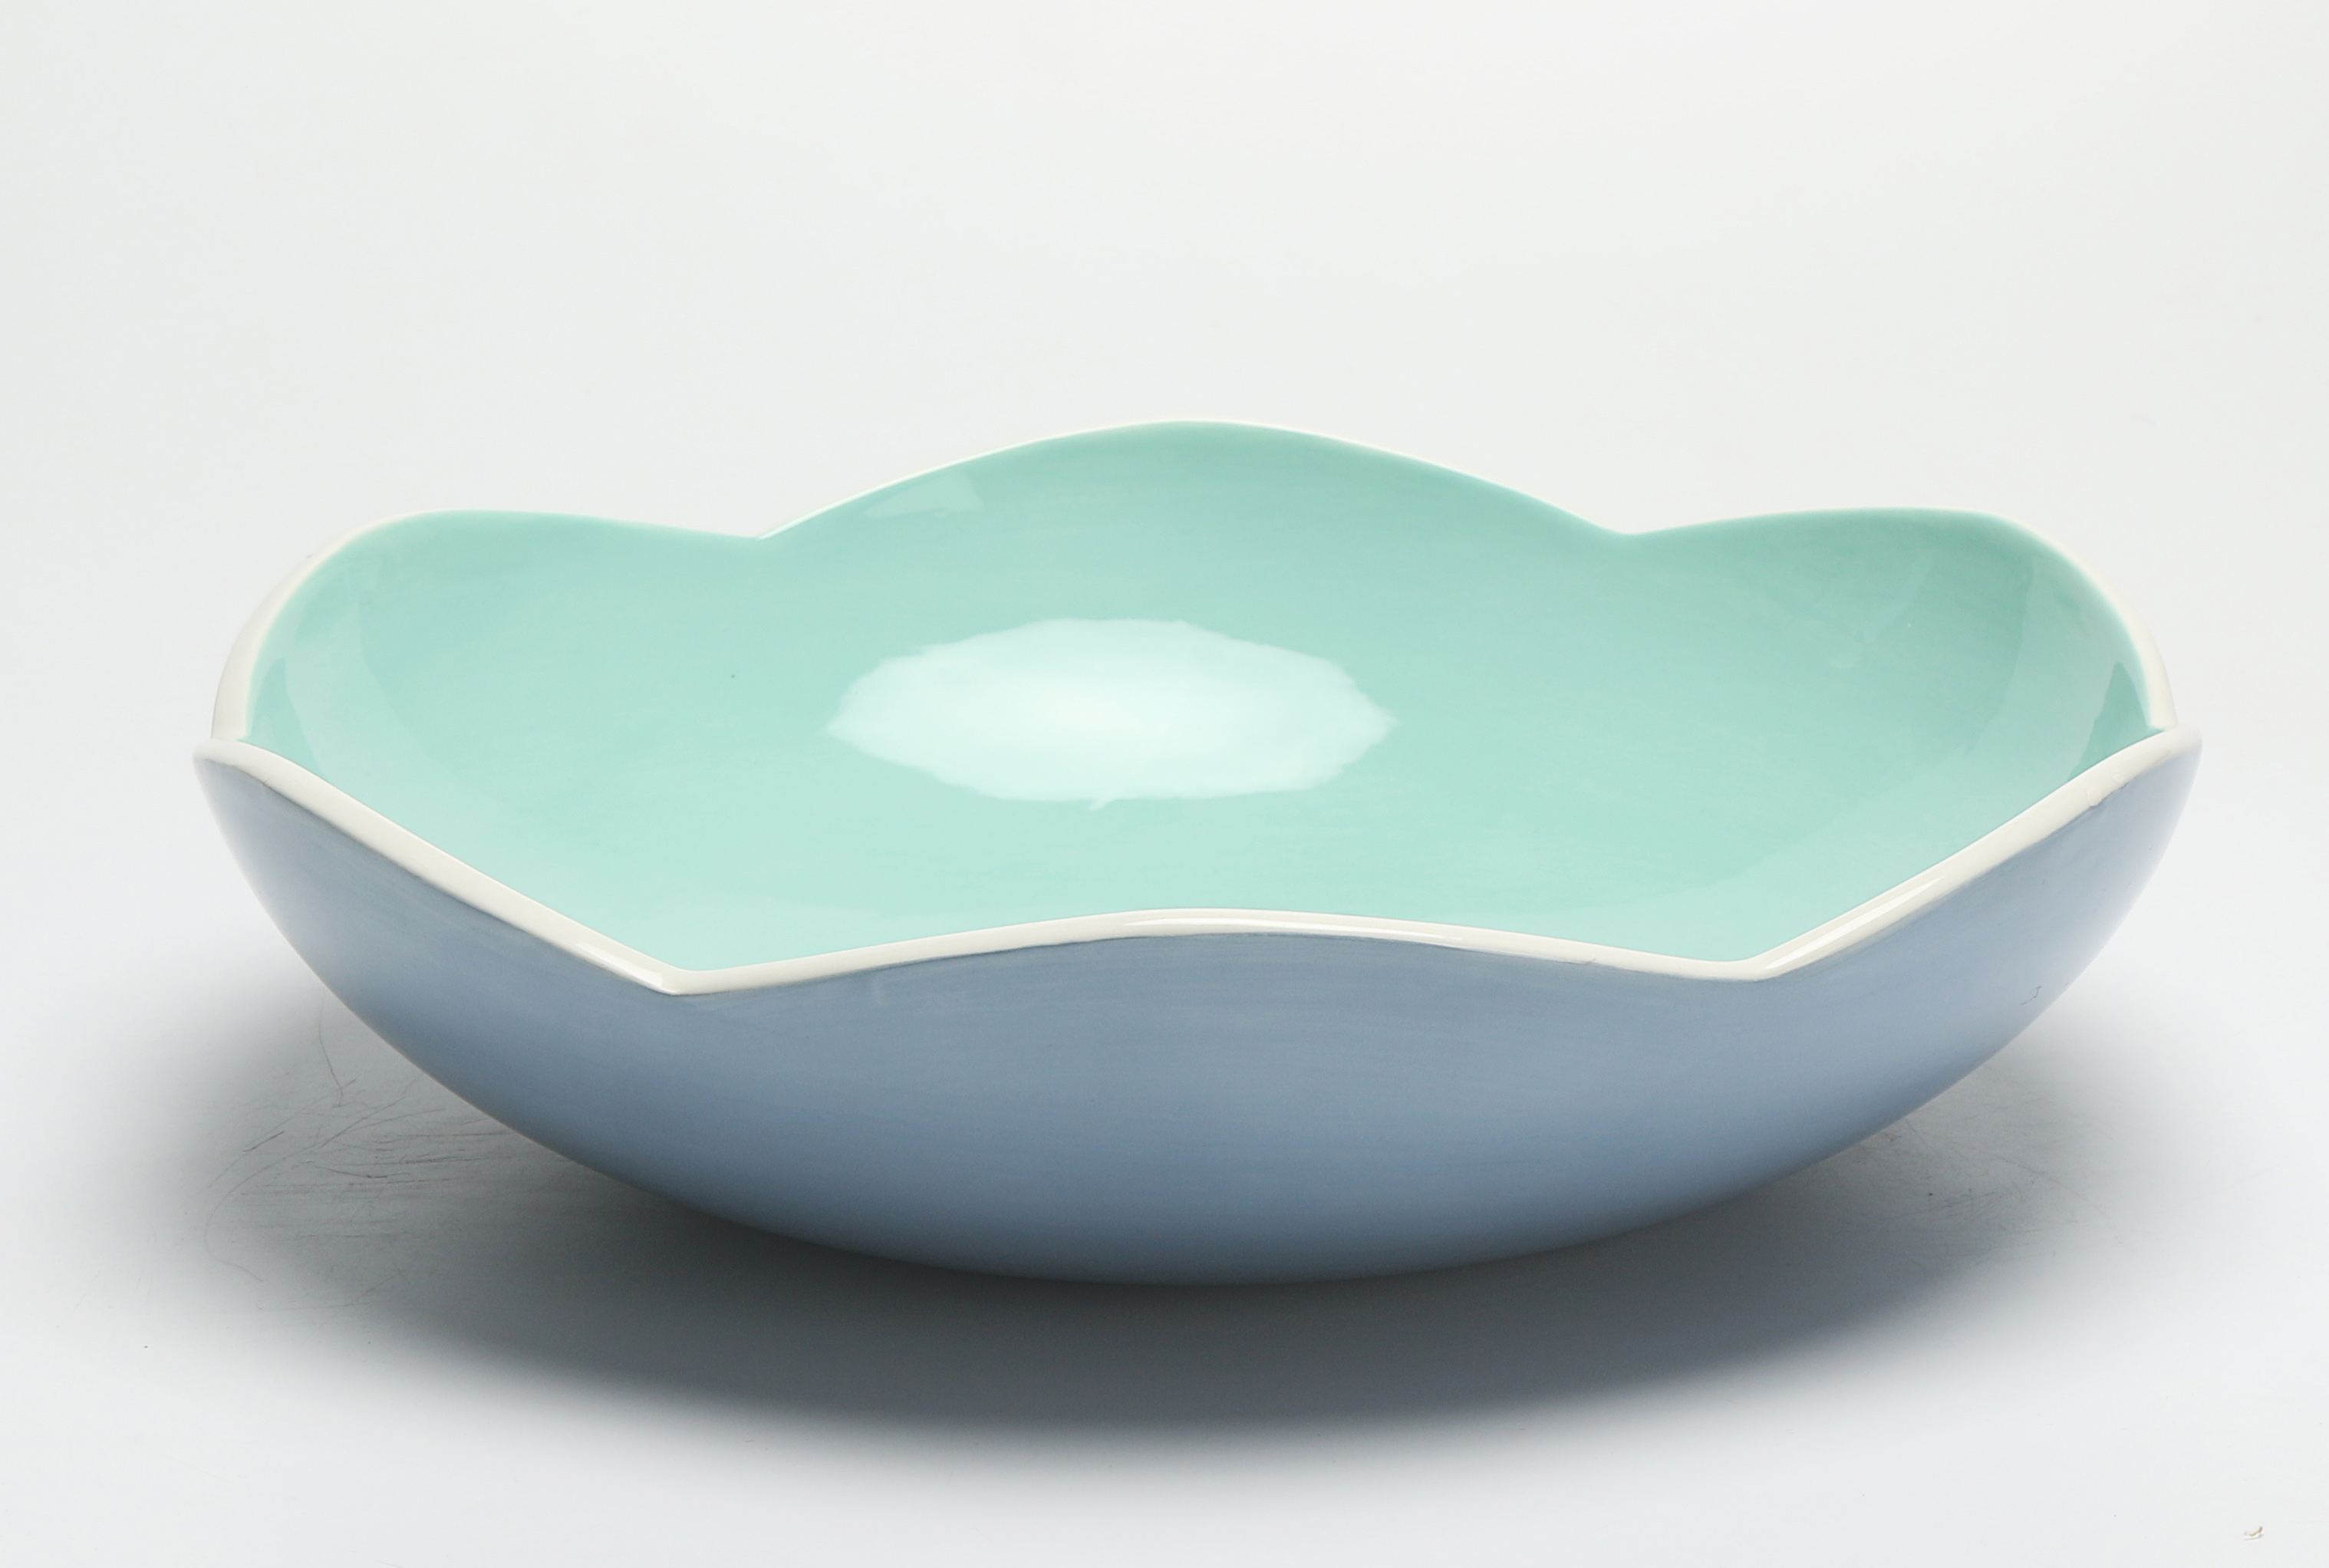 Mainstays Floral Shaped Ceramic Nested Bowl, Set of 3 - image 4 of 5